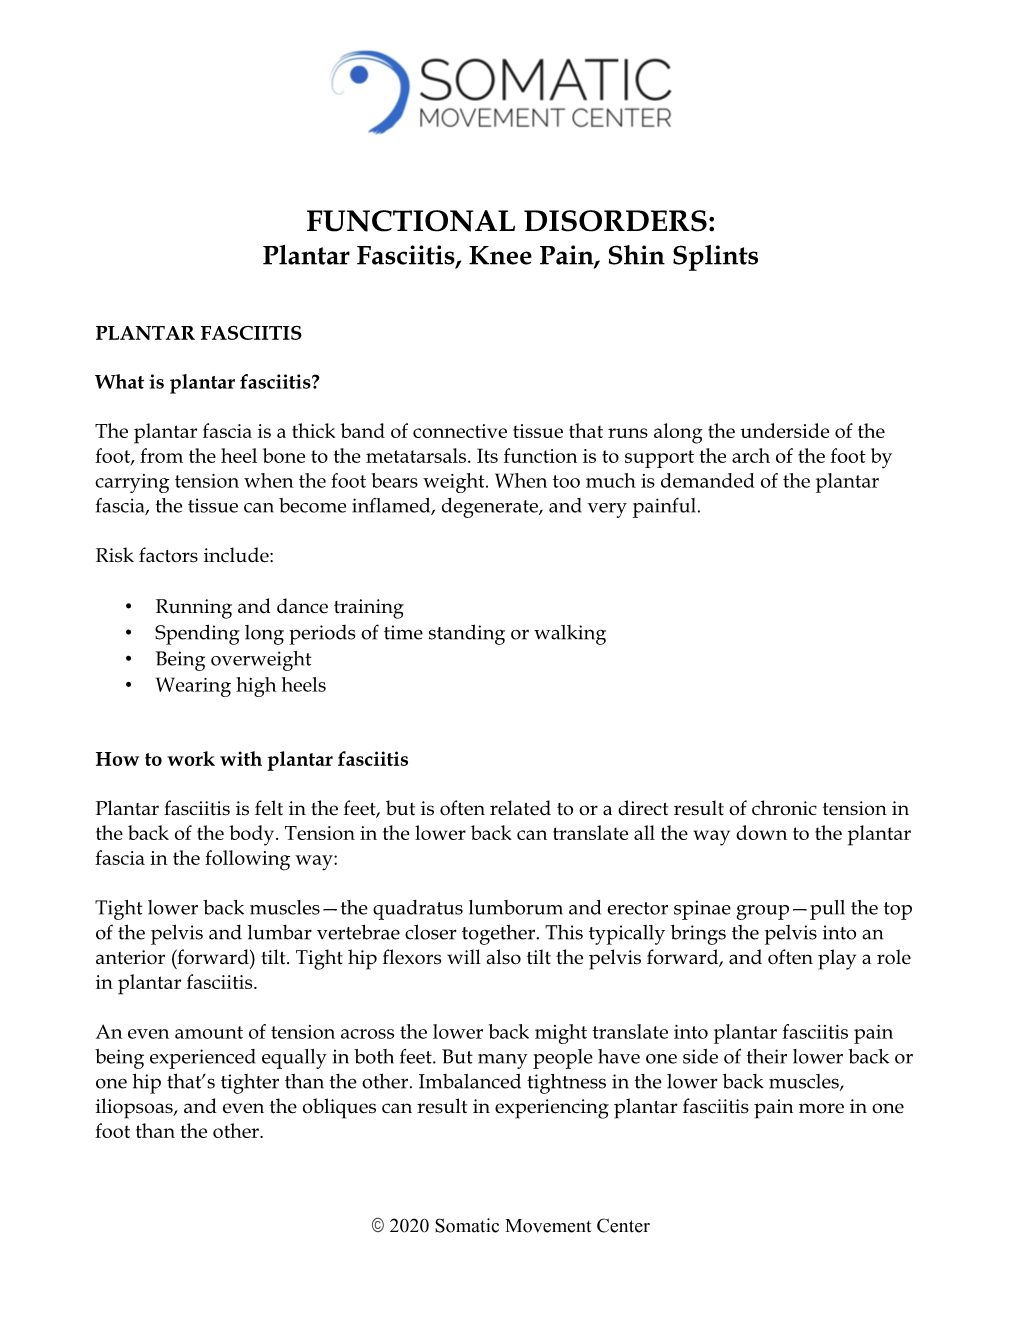 FUNCTIONAL DISORDERS: Plantar Fasciitis, Knee Pain, Shin Splints